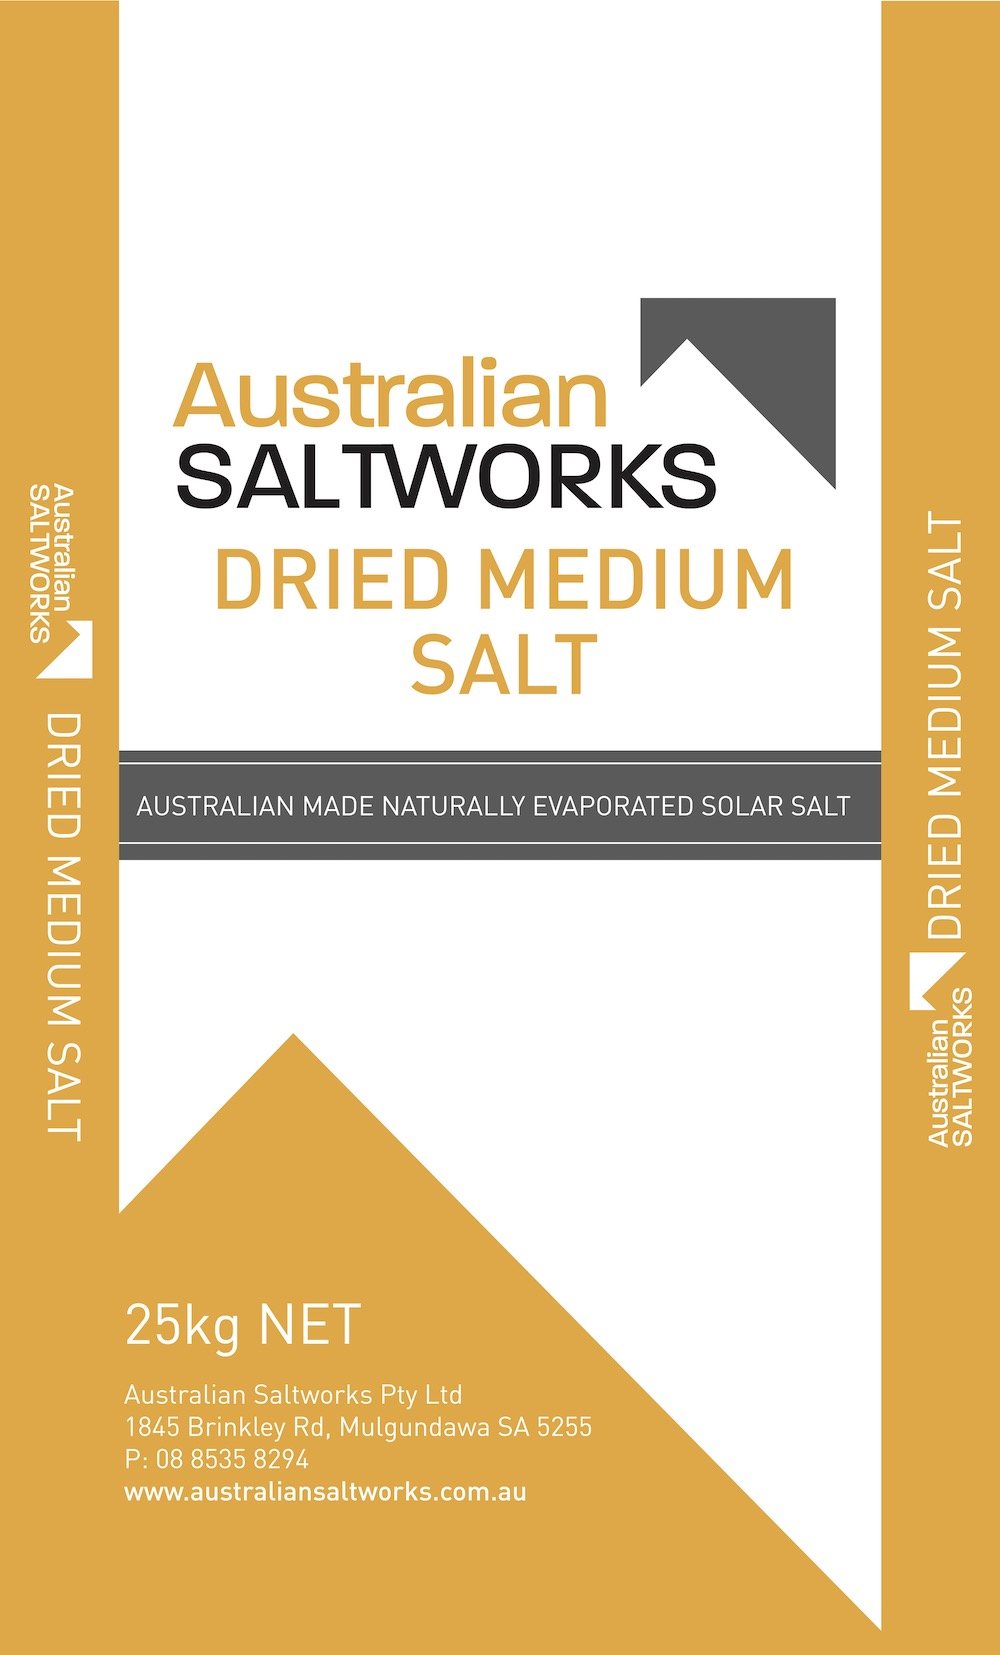 Saltworks Dried Medium Salt.jpg